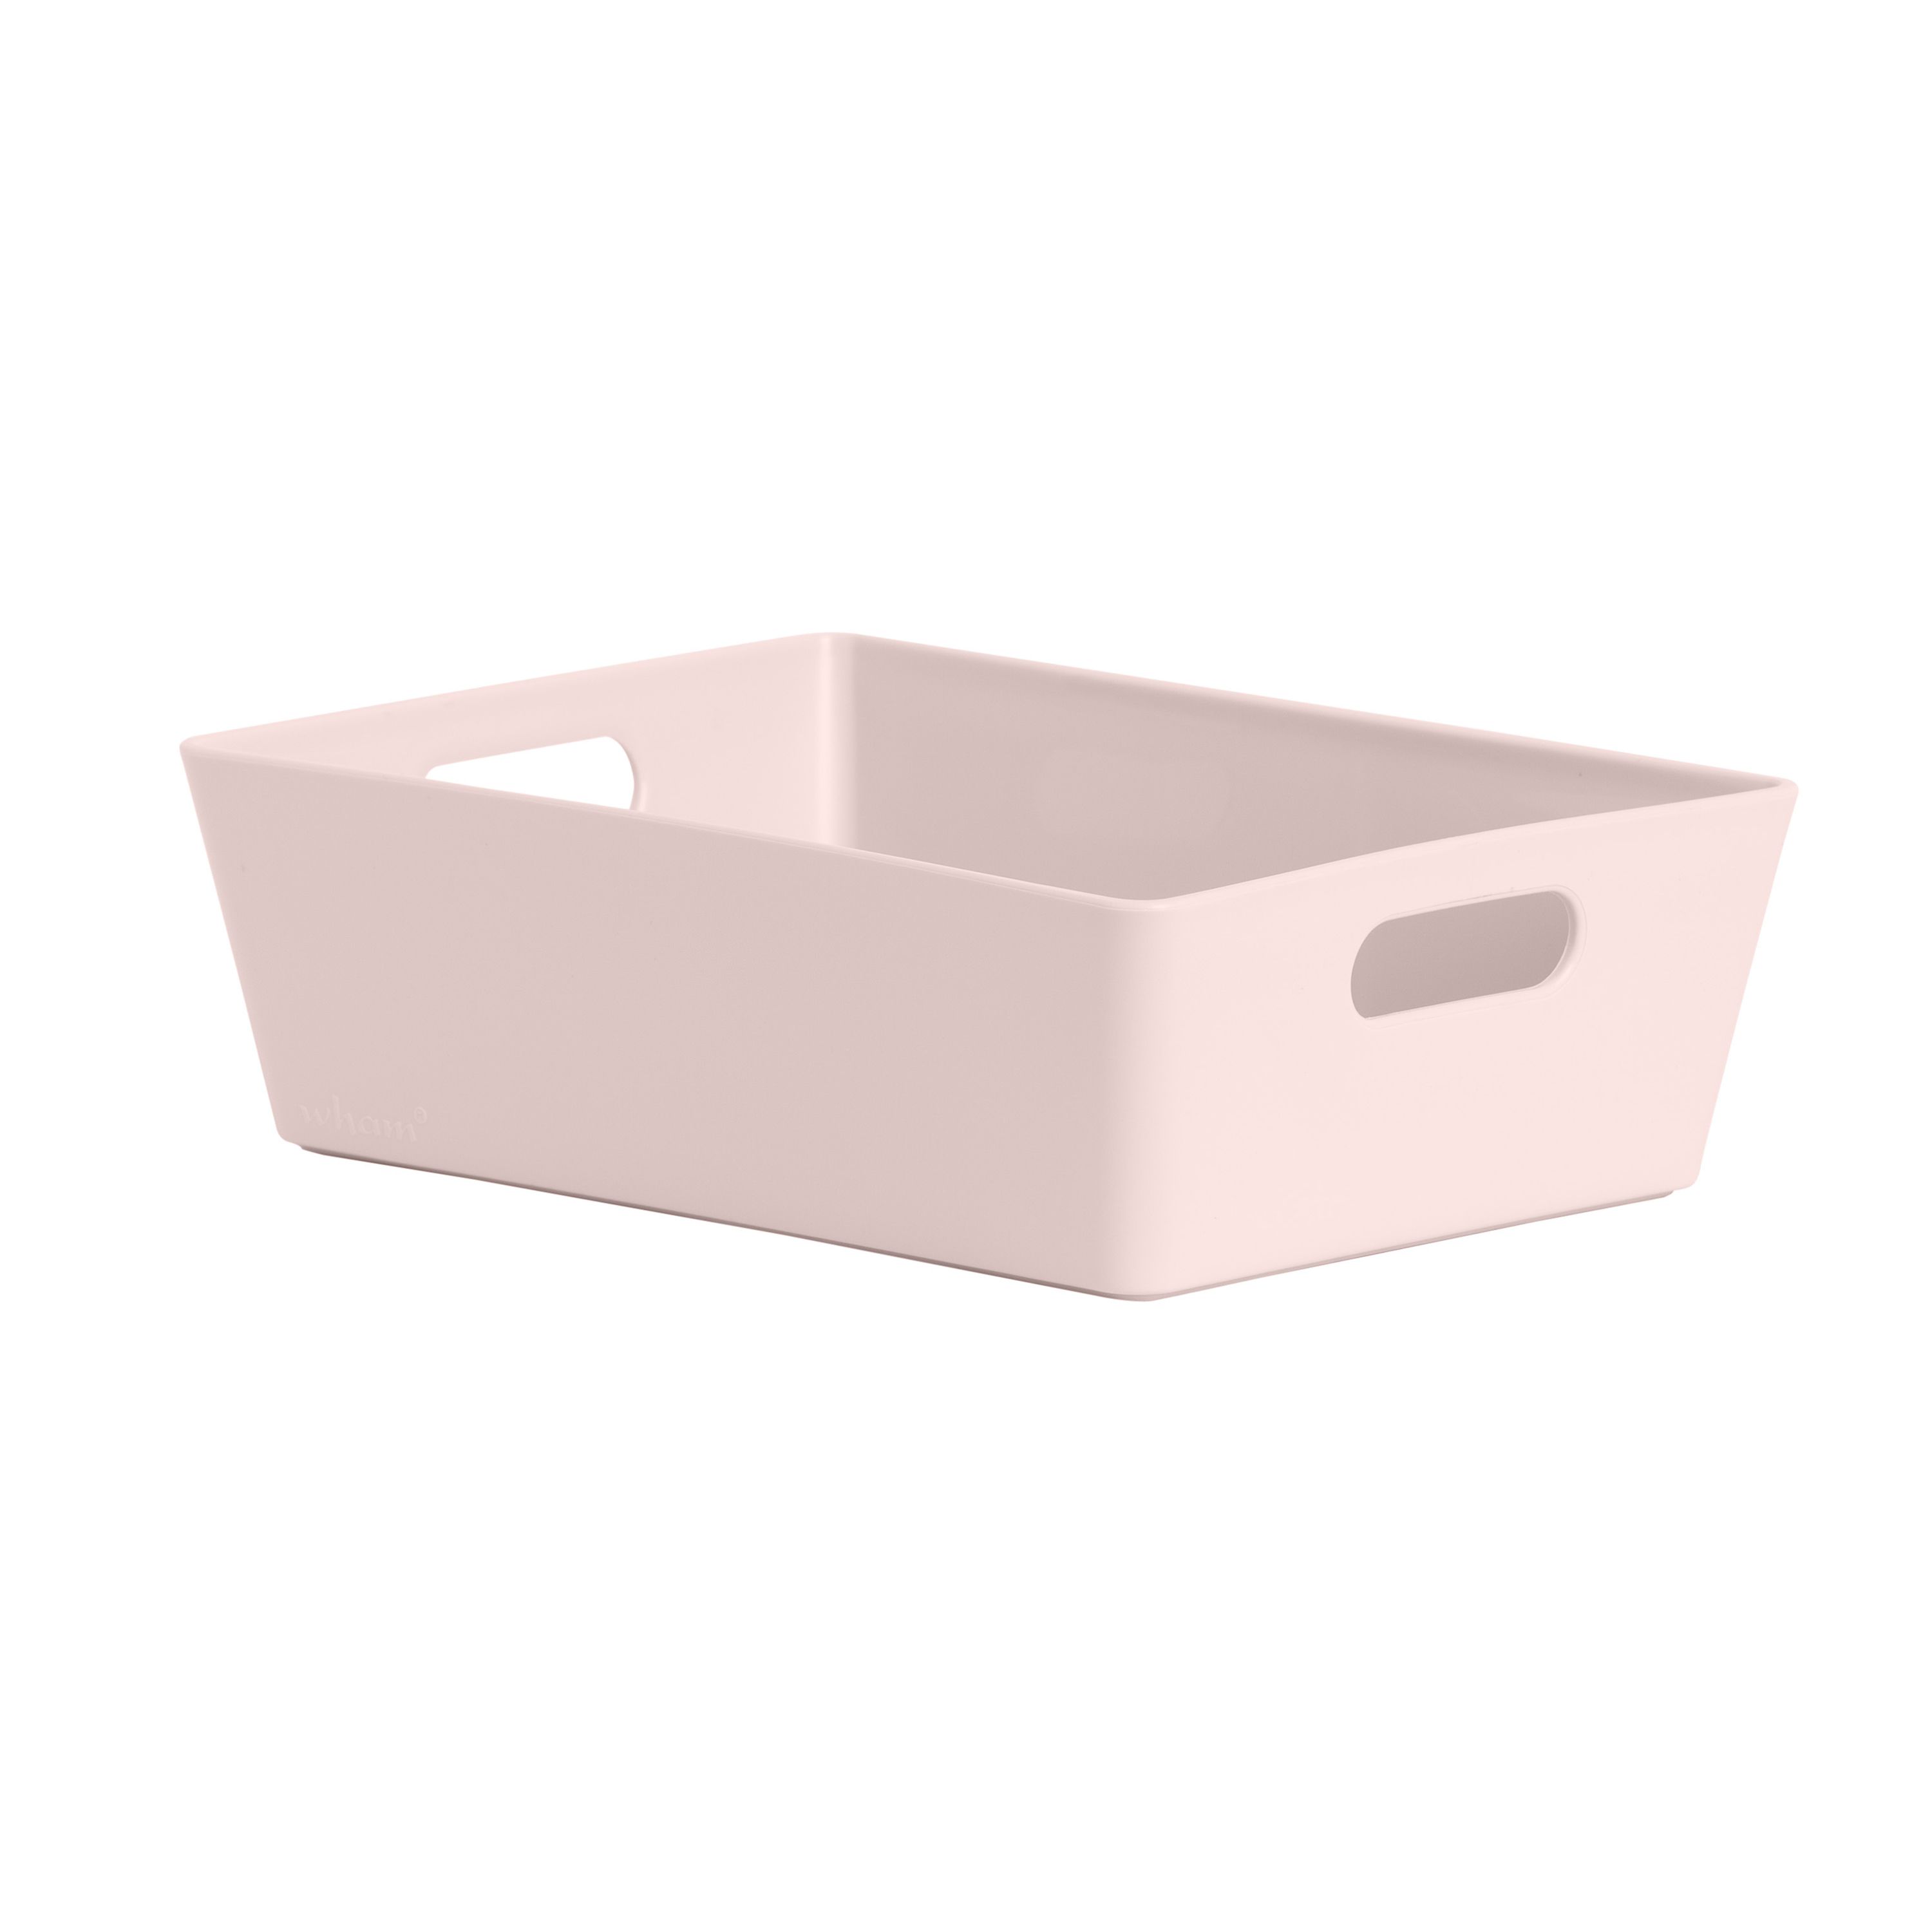 Wham Studio Gloss light pink Plastic Nestable Storage basket (H)5cm (W)12cm (D)12cm